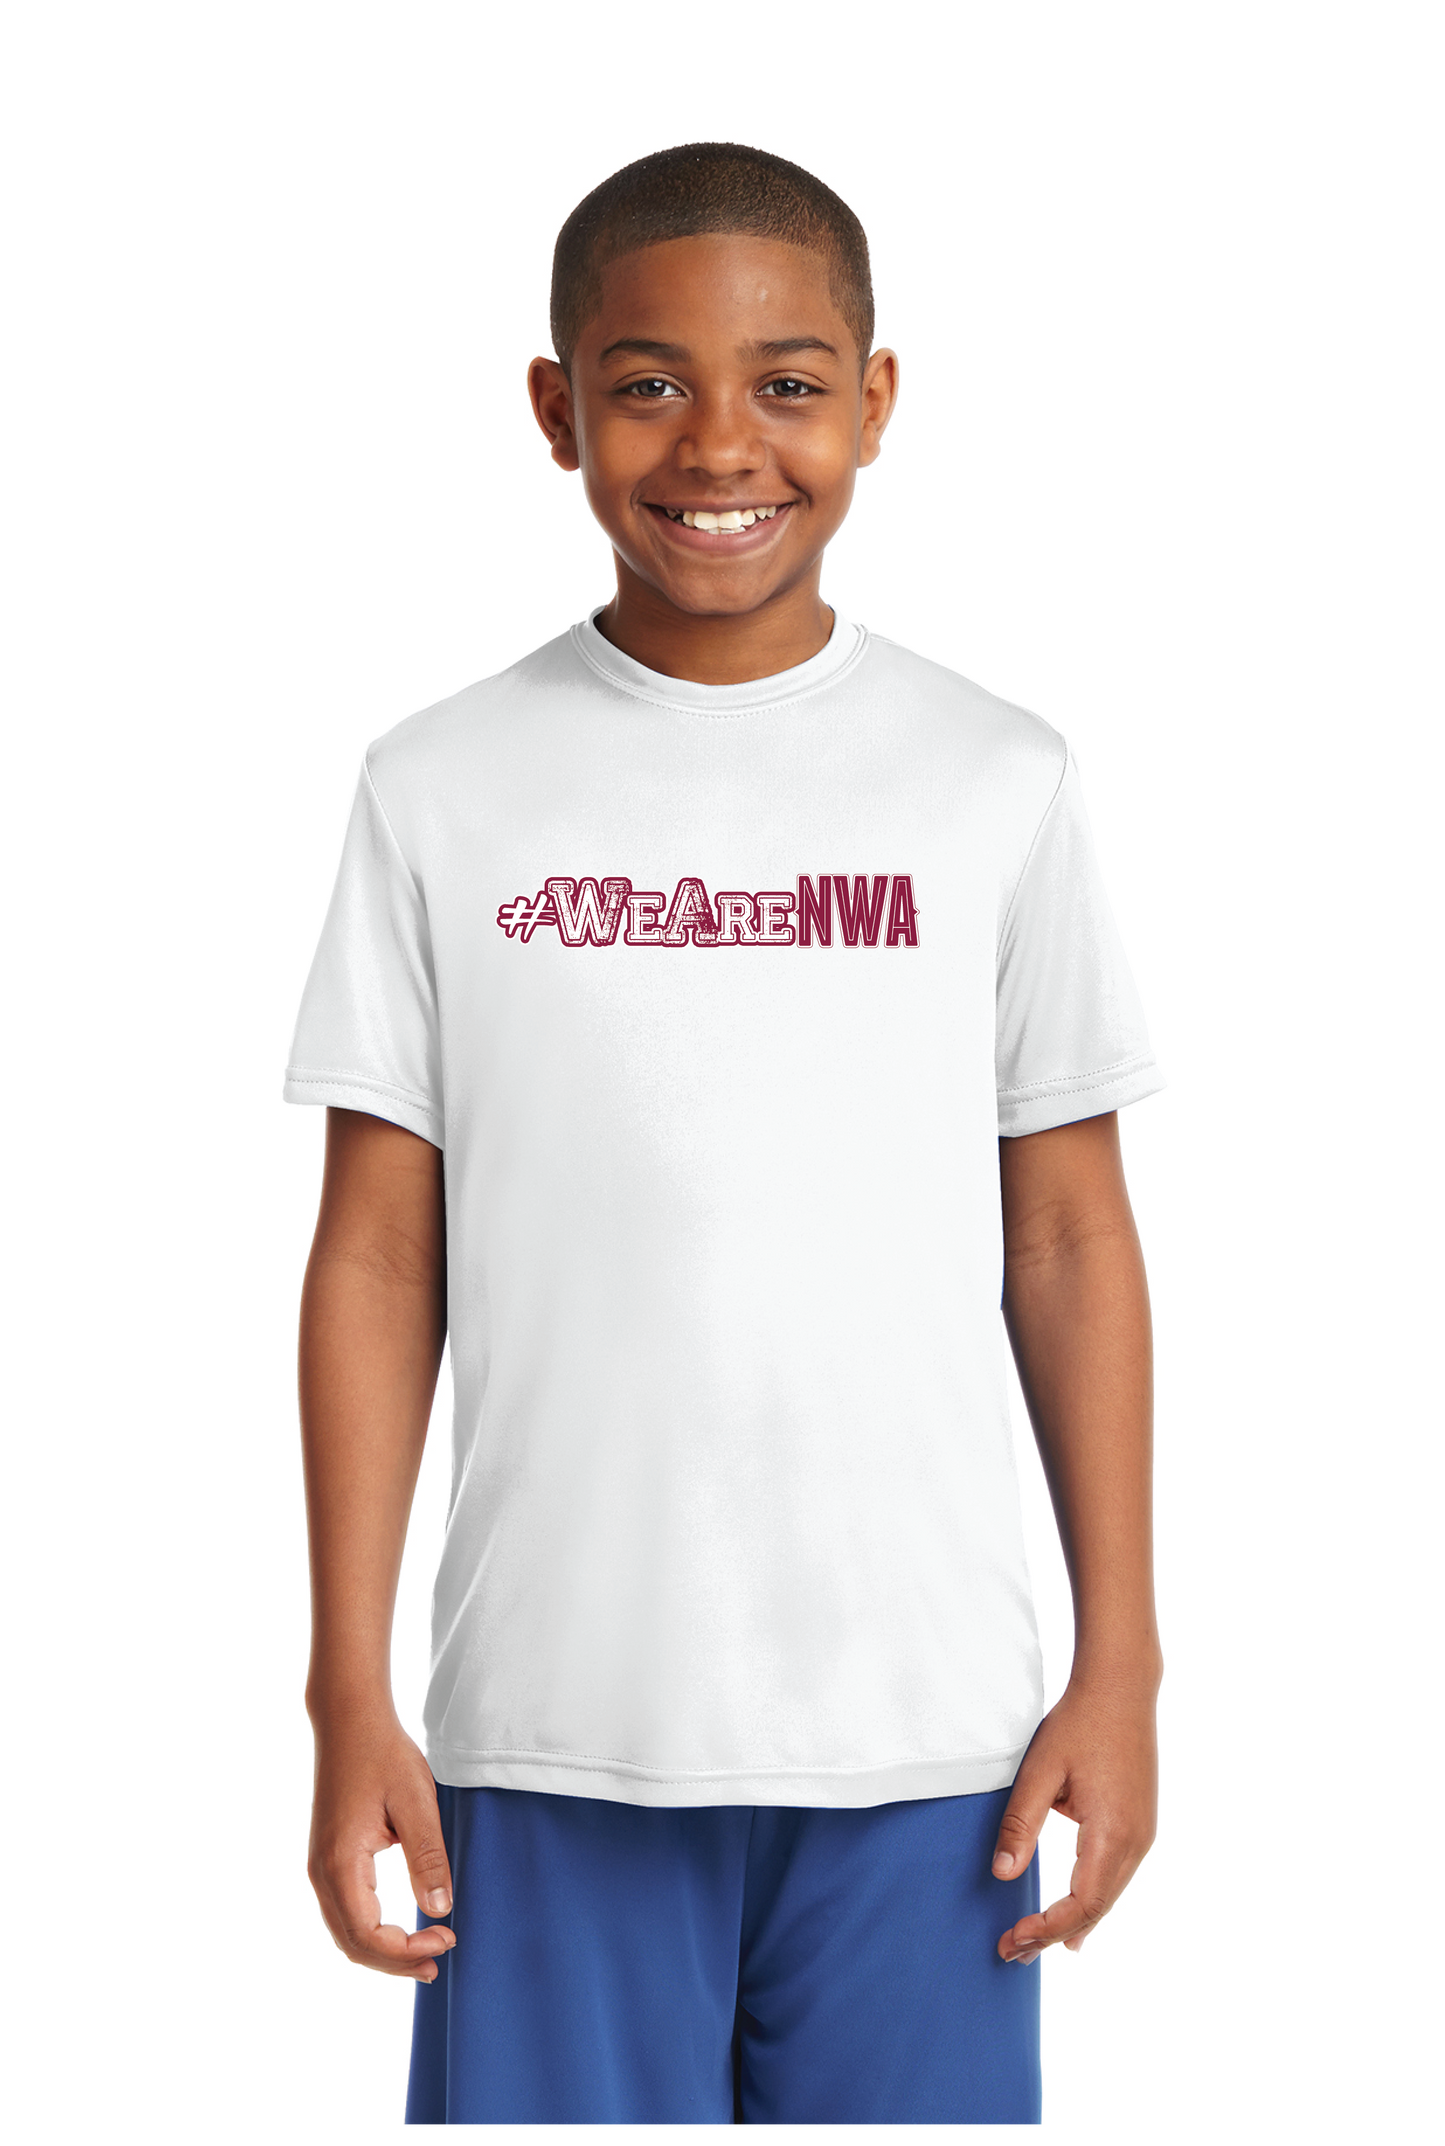 COTTON - NWA T-Shirt - Any design